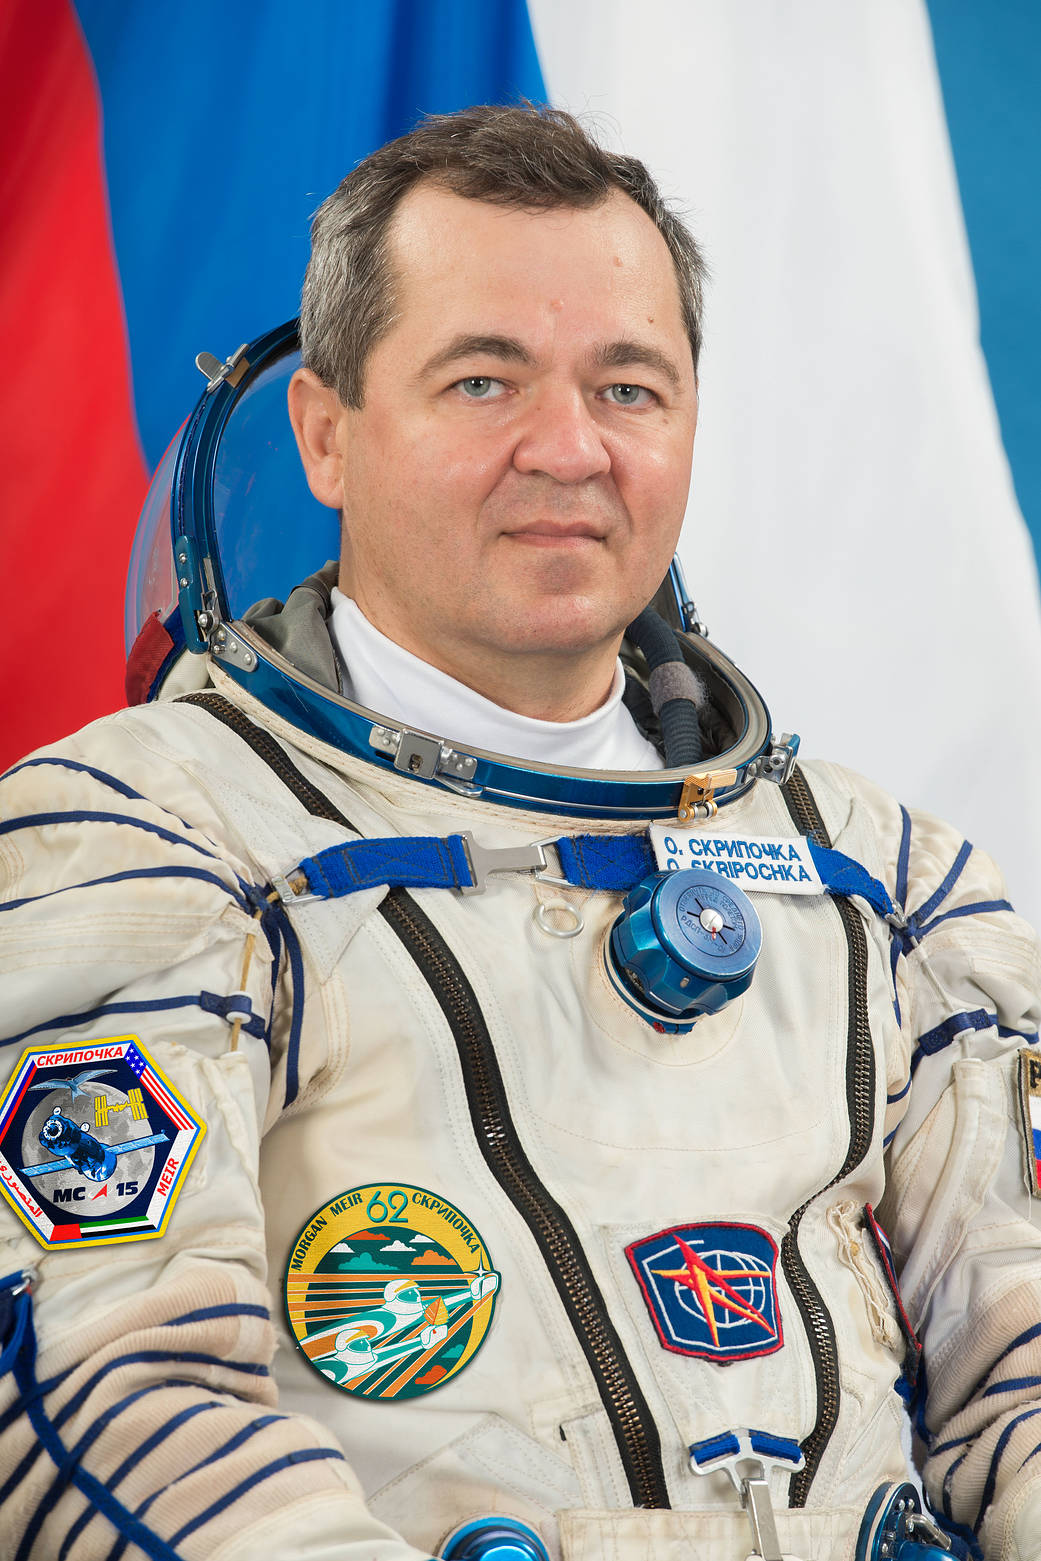 Roscosmos cosmonaut and Expedition 61-62 crewmember Oleg Skripochka